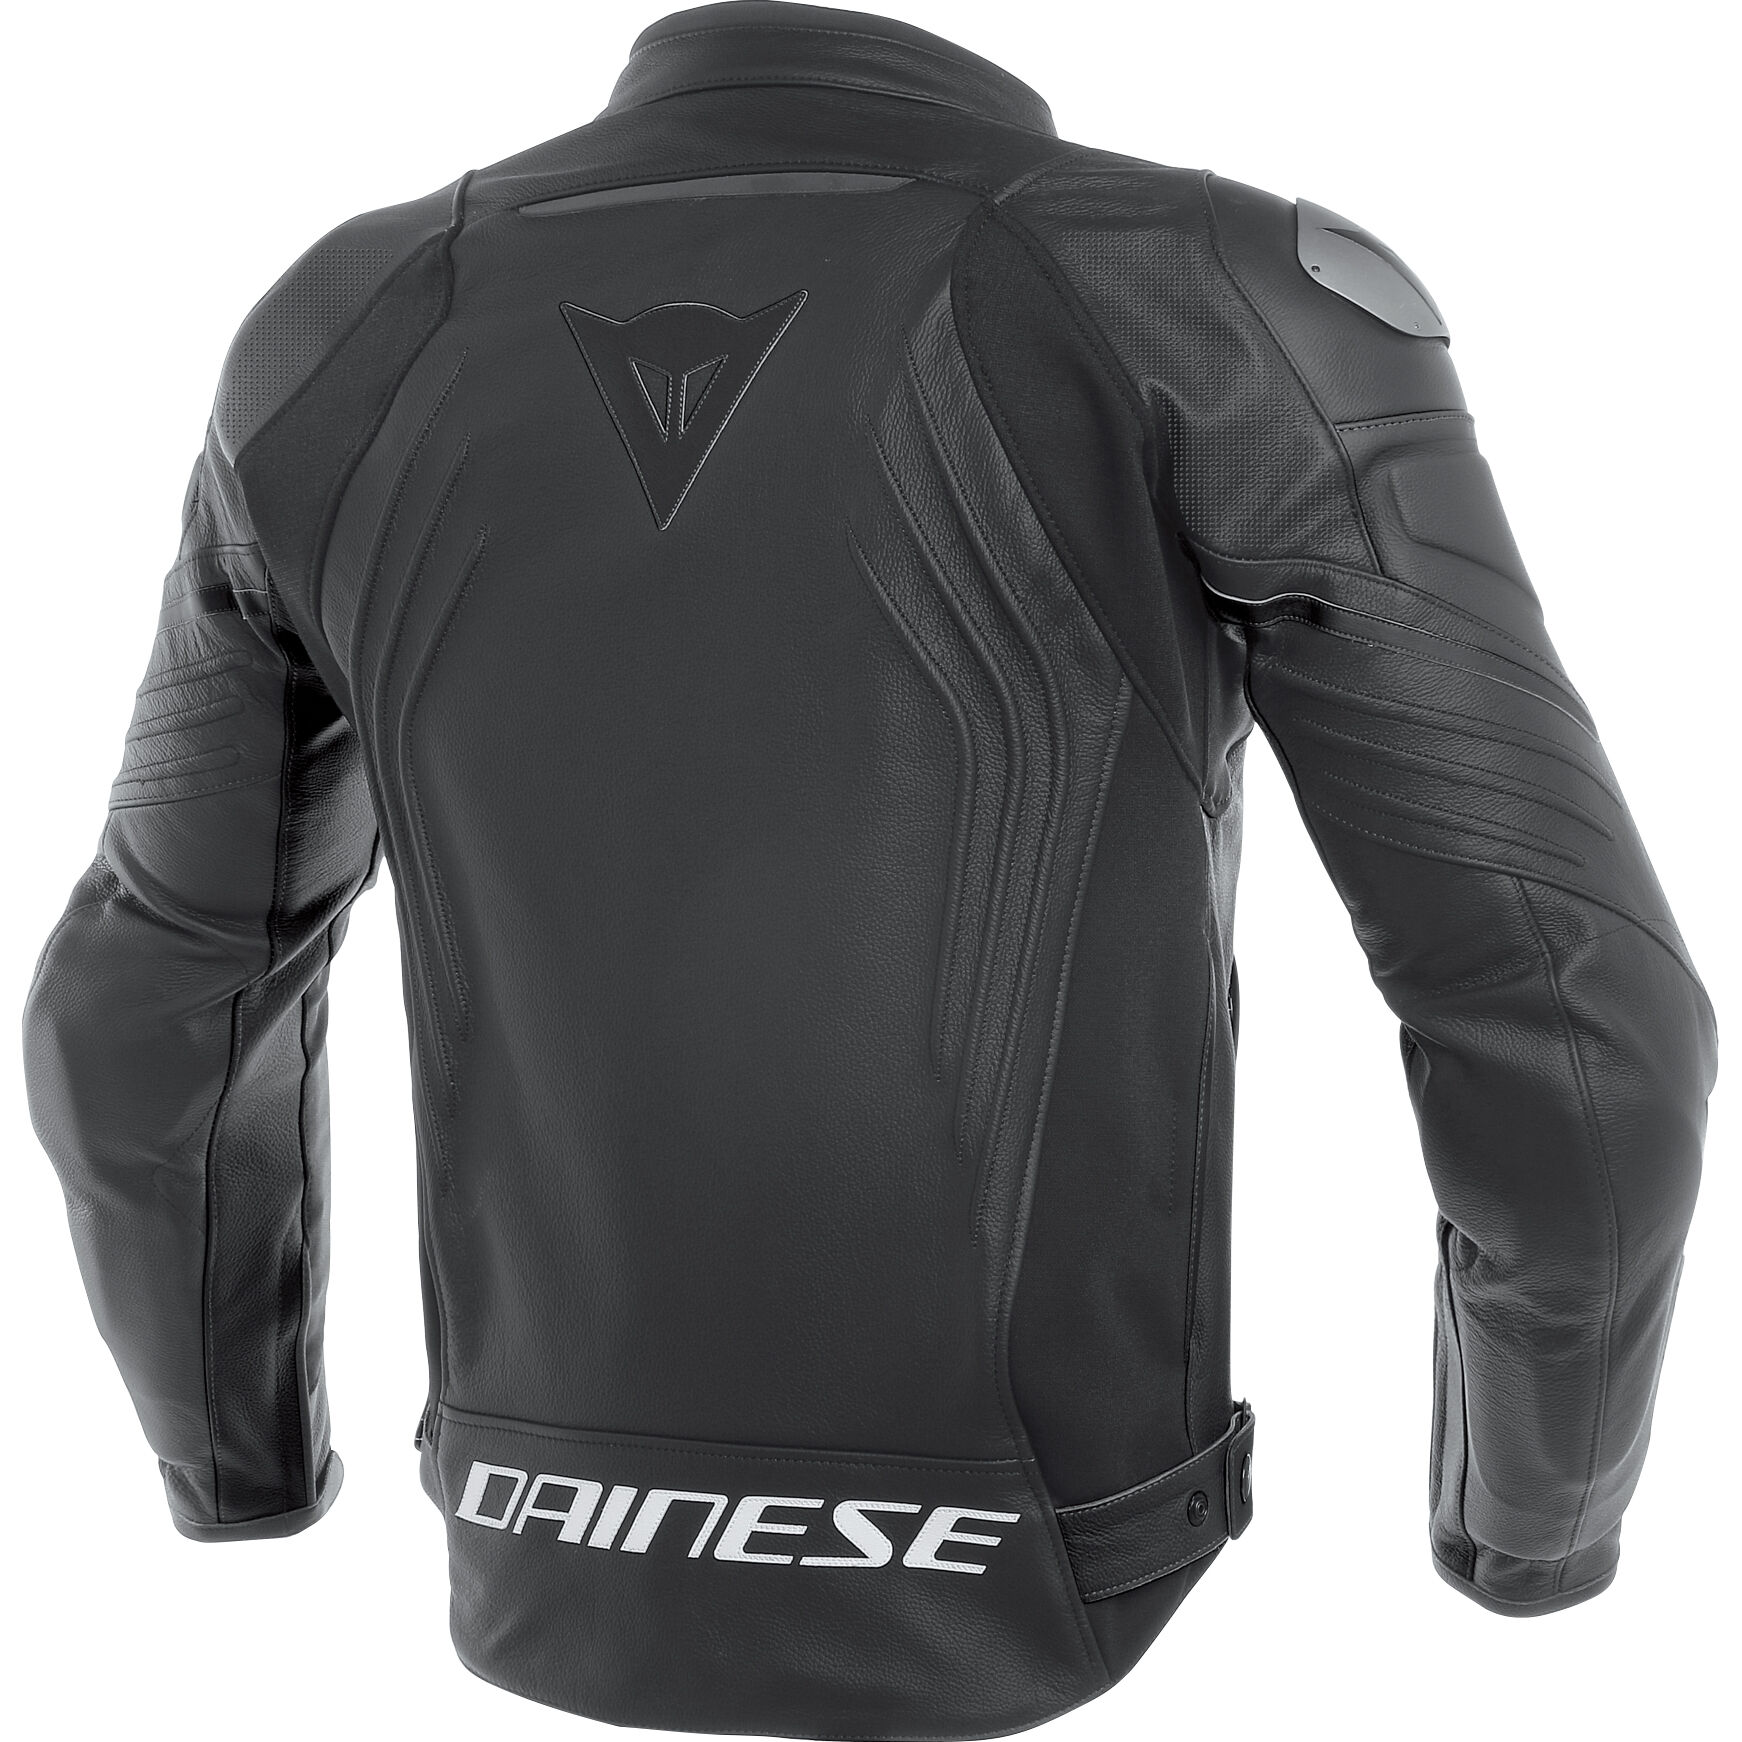 5x Motorbike Motorcycle Protection Pad Jacket Armour Insert Set Black New 